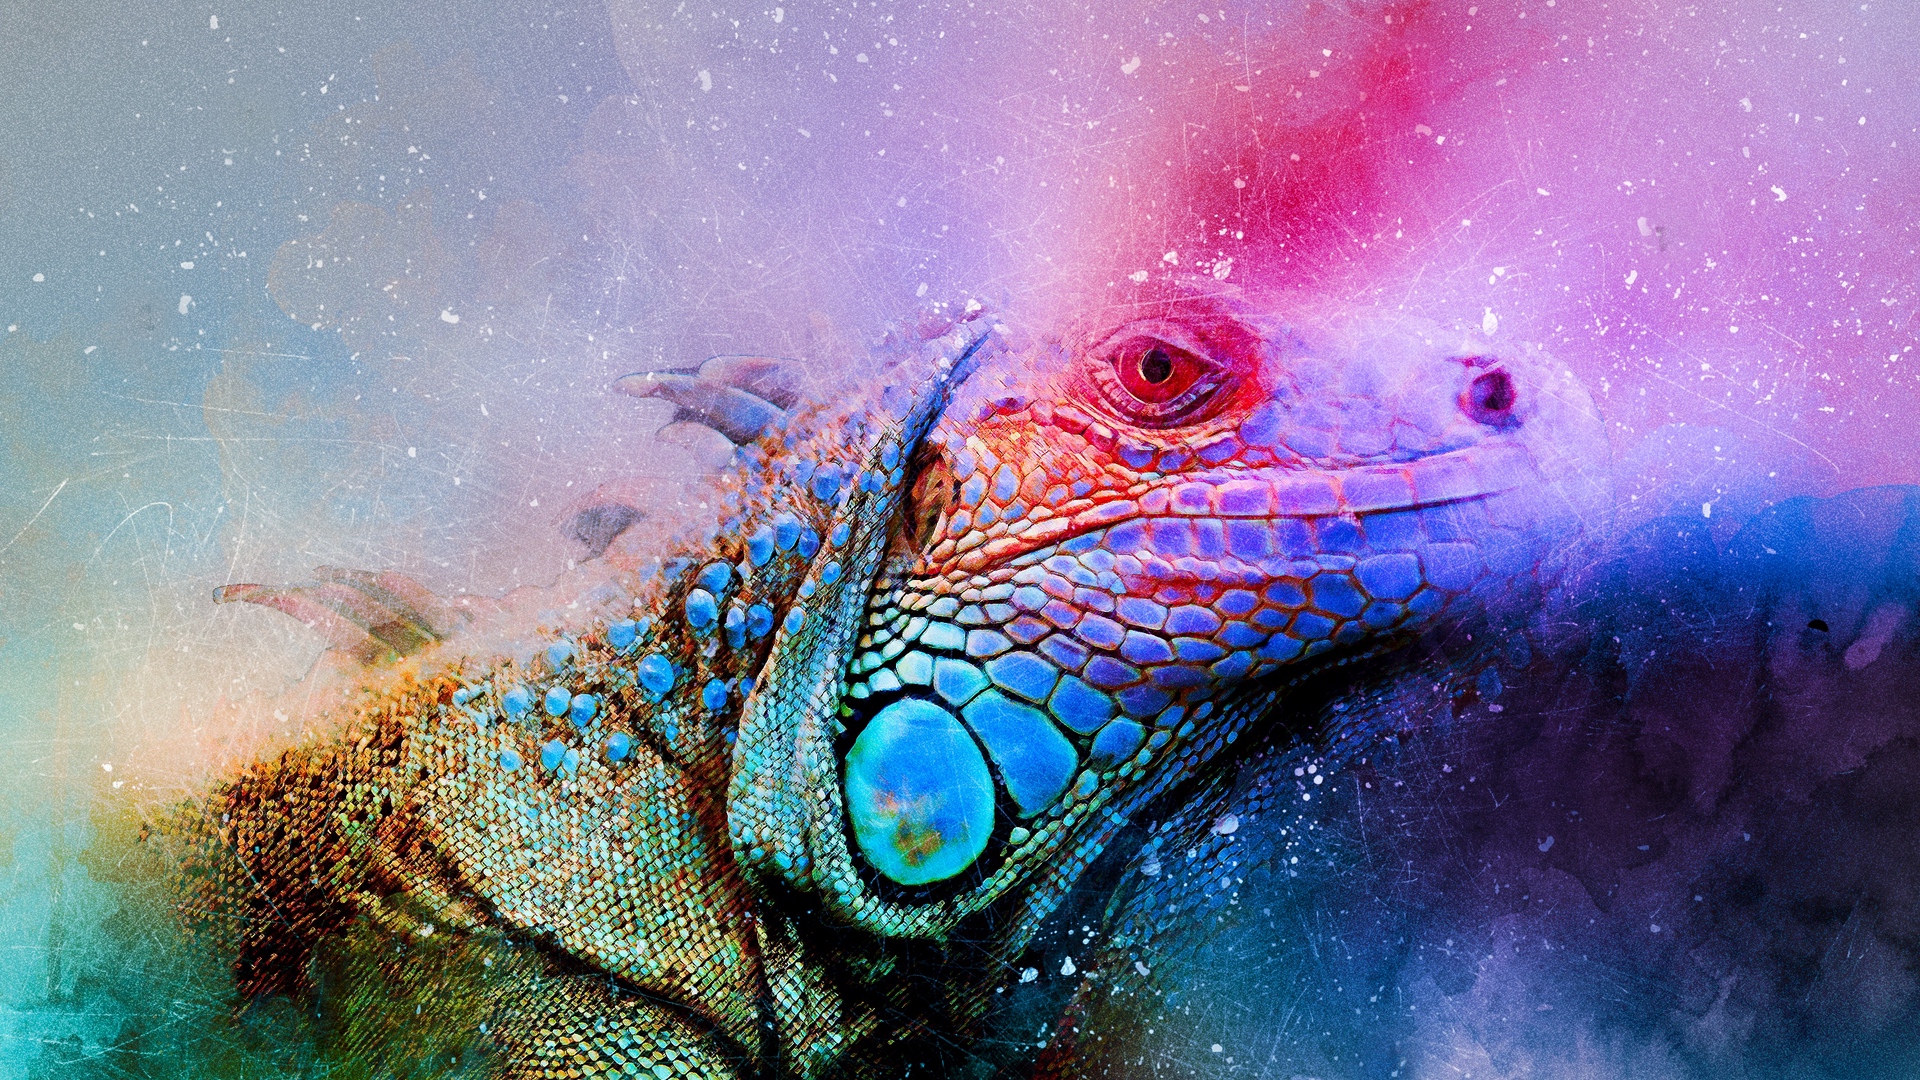 Download wallpaper 1920x1080 iguana, reptile, art, colorful full HD